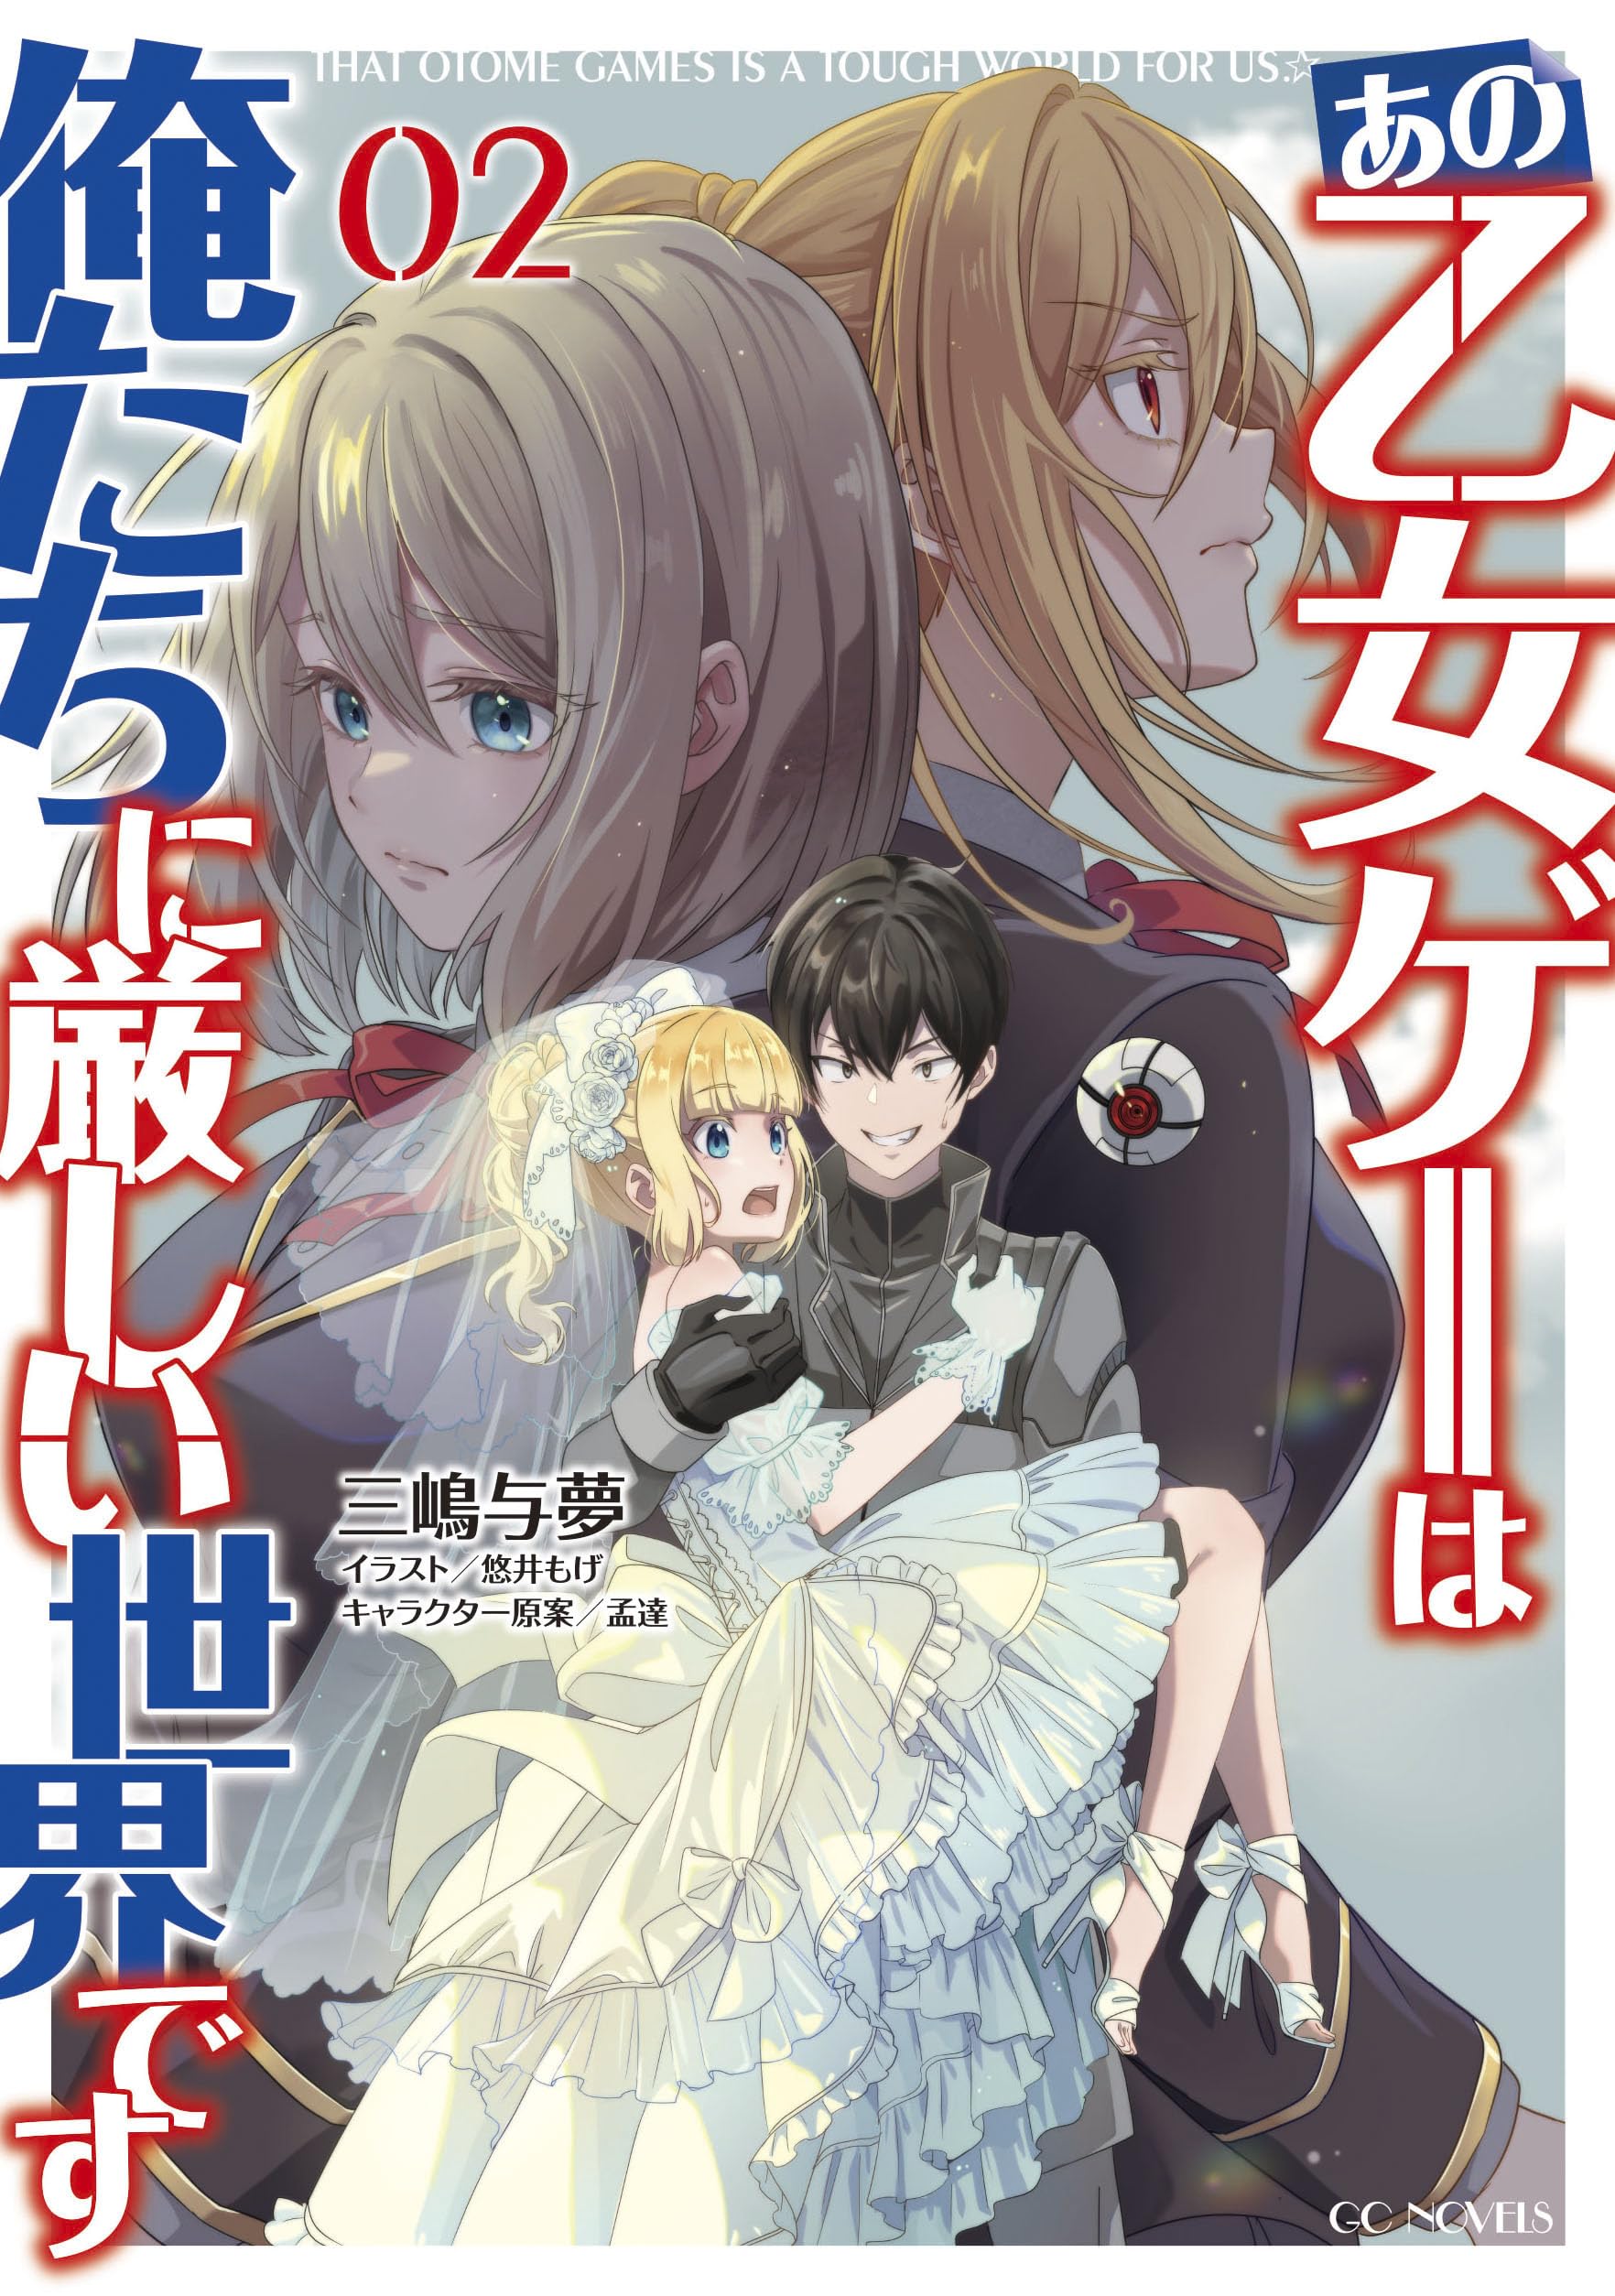 Novos volumes de OreSuki e Index – Vendas de Light Novels (Junho 8 - 14) -  IntoxiAnime